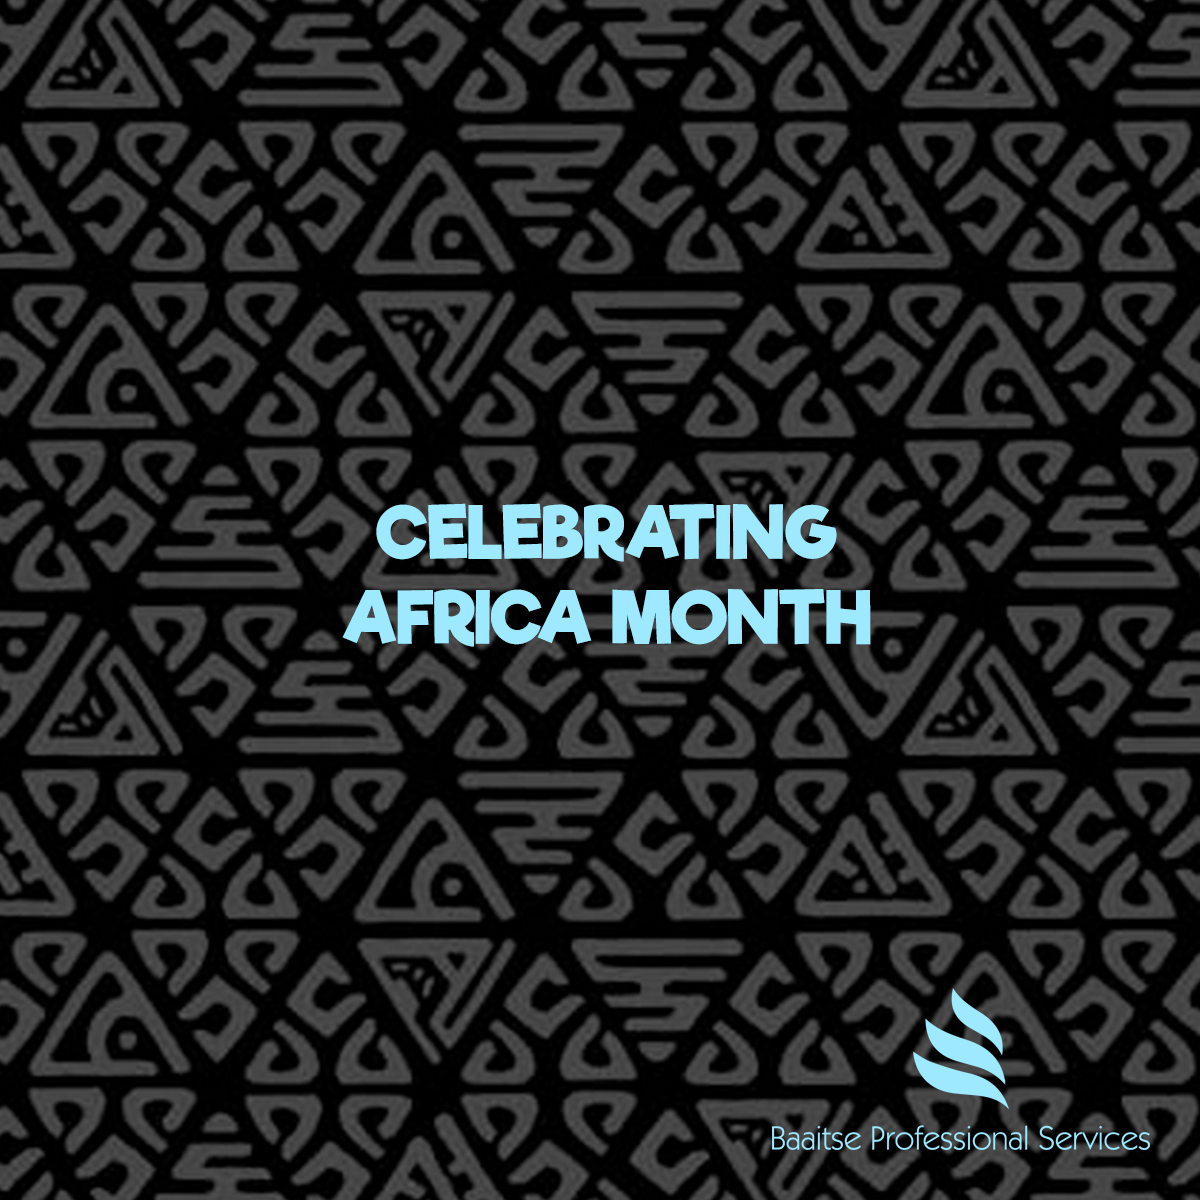 Celebrating Africa Month :)

#baaitseprofessionalservices #baaitse #celebrating #africa #africamonth #africamonth2023